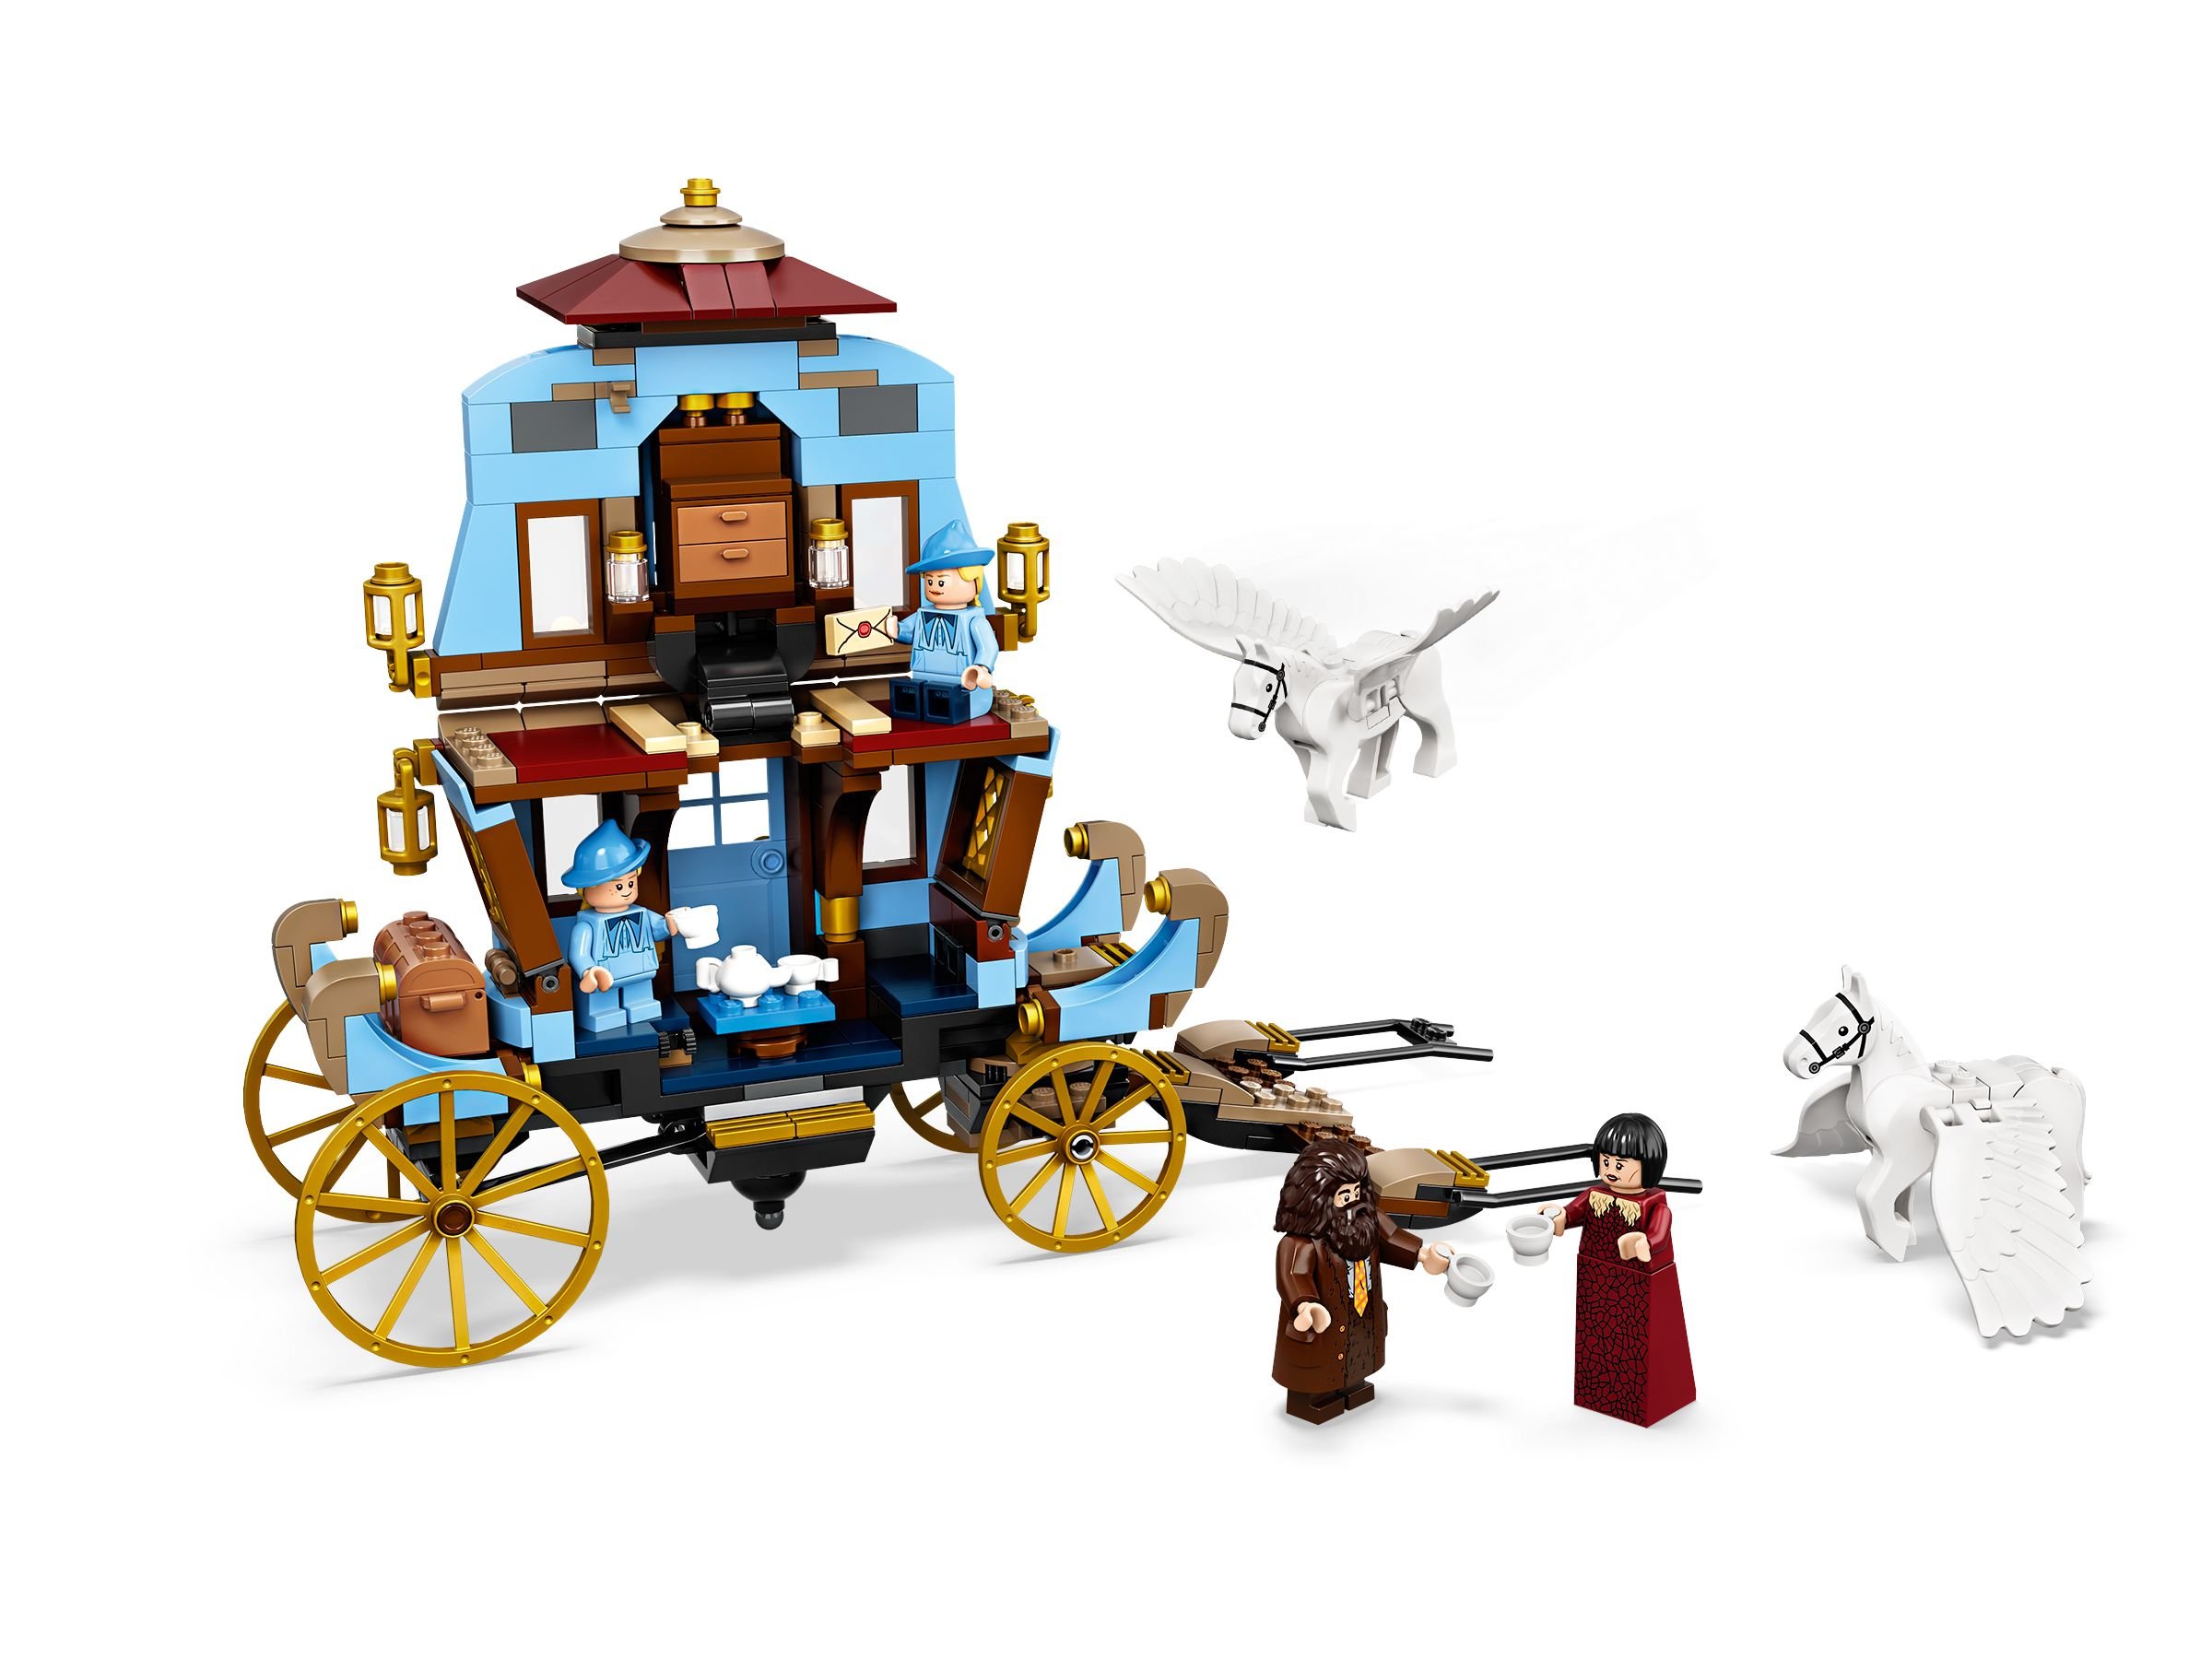 LEGO Harry Potter 75958 Beauxbatons Kutsche LEGO_75958_alt2.jpg